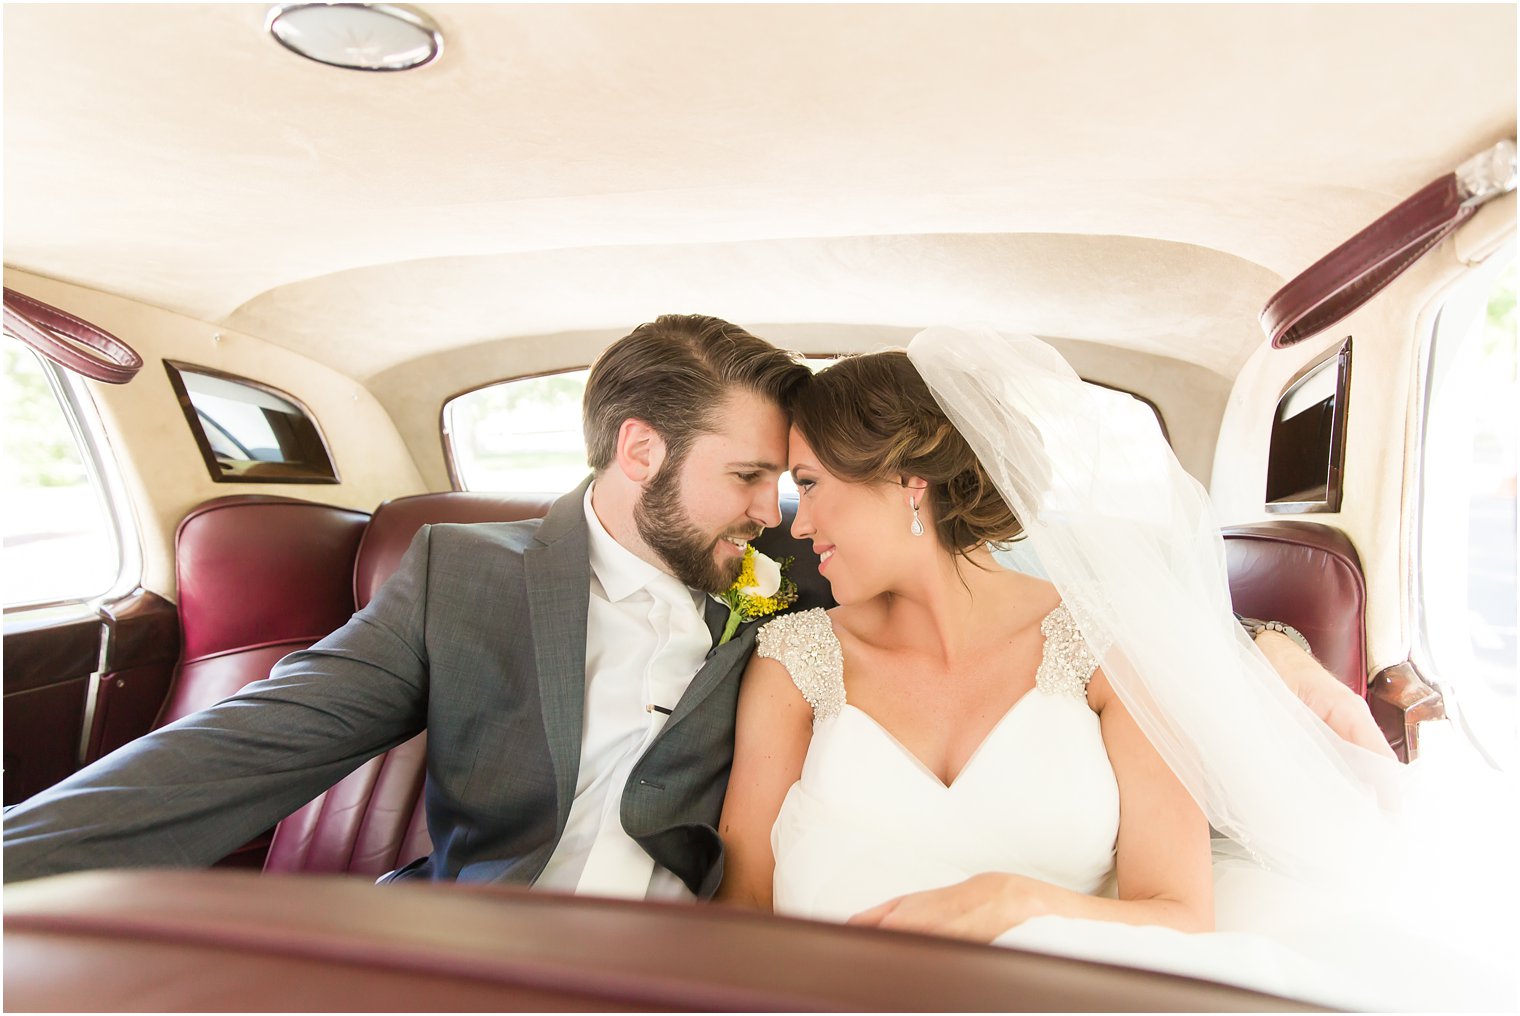 Romantic photo in Rolls Royce